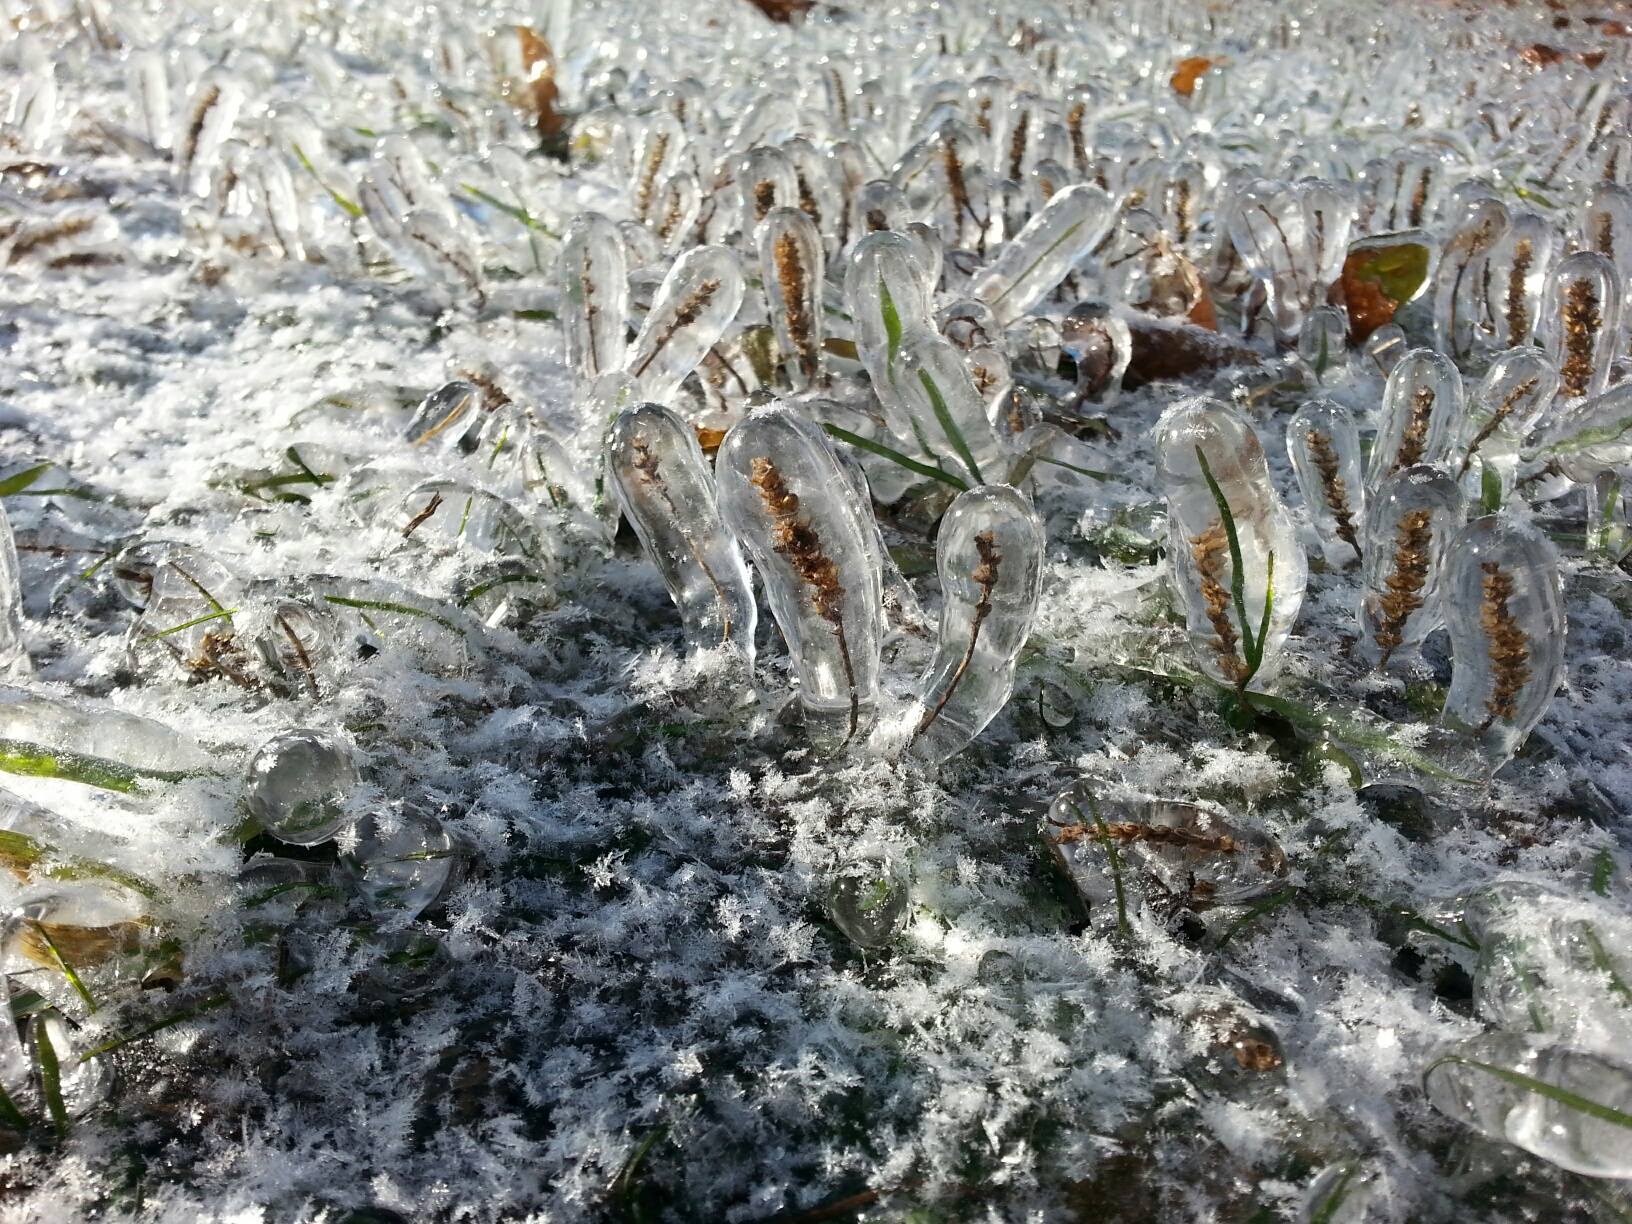 Frozen Grass: Local Garden Home to Strange Winter Phenomenon ...